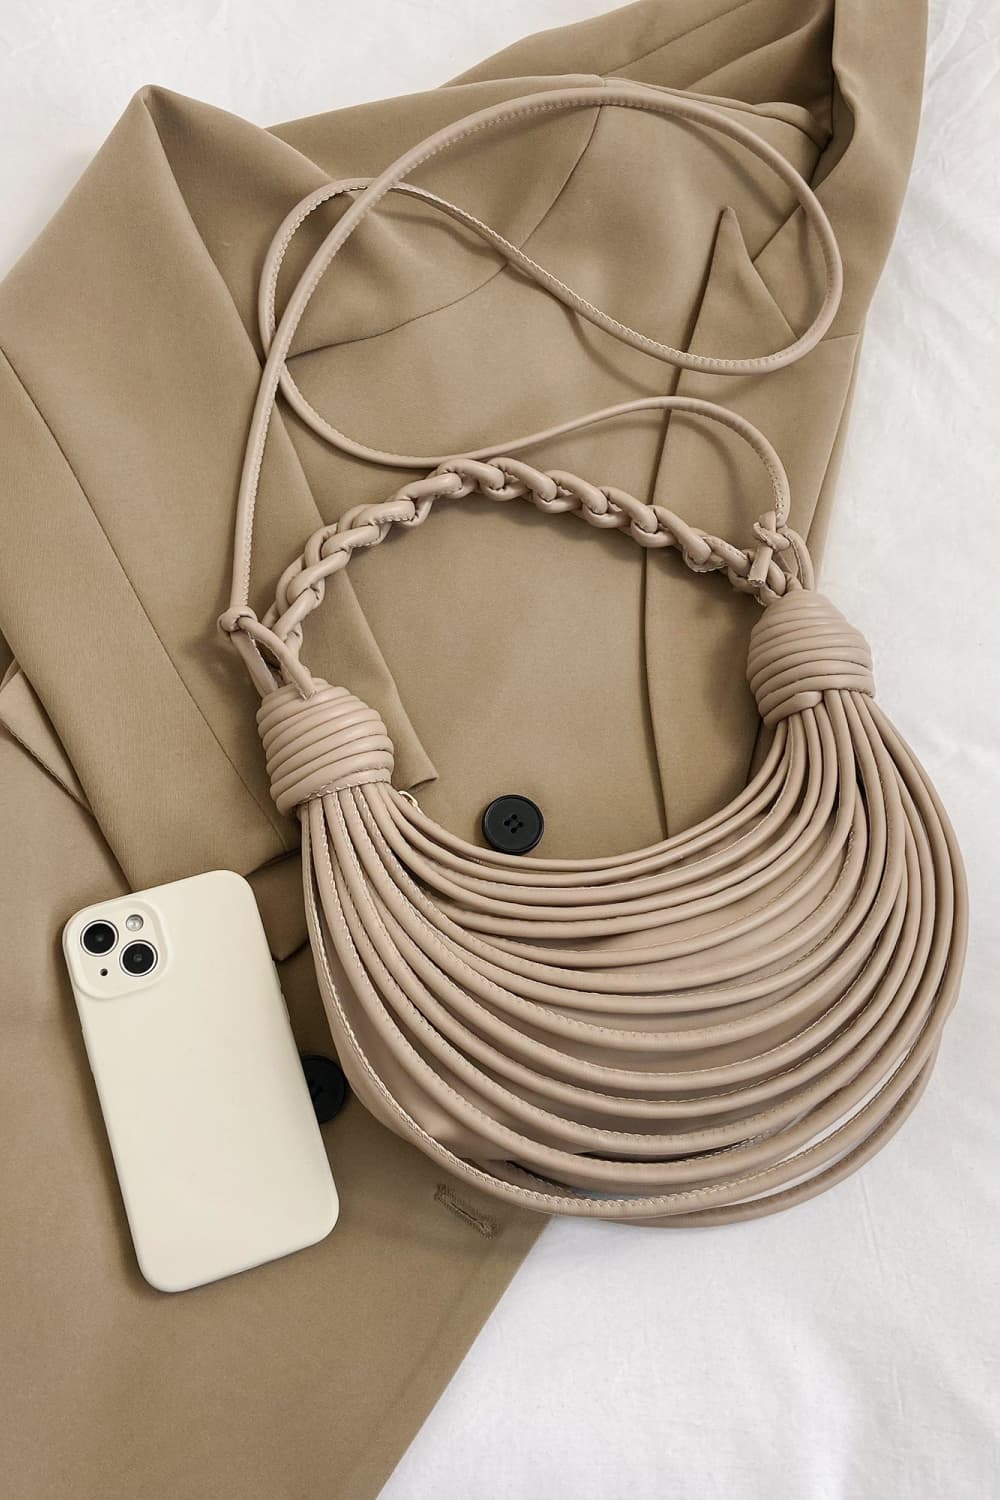 PU Leather Handbag - TiffanyzKlozet